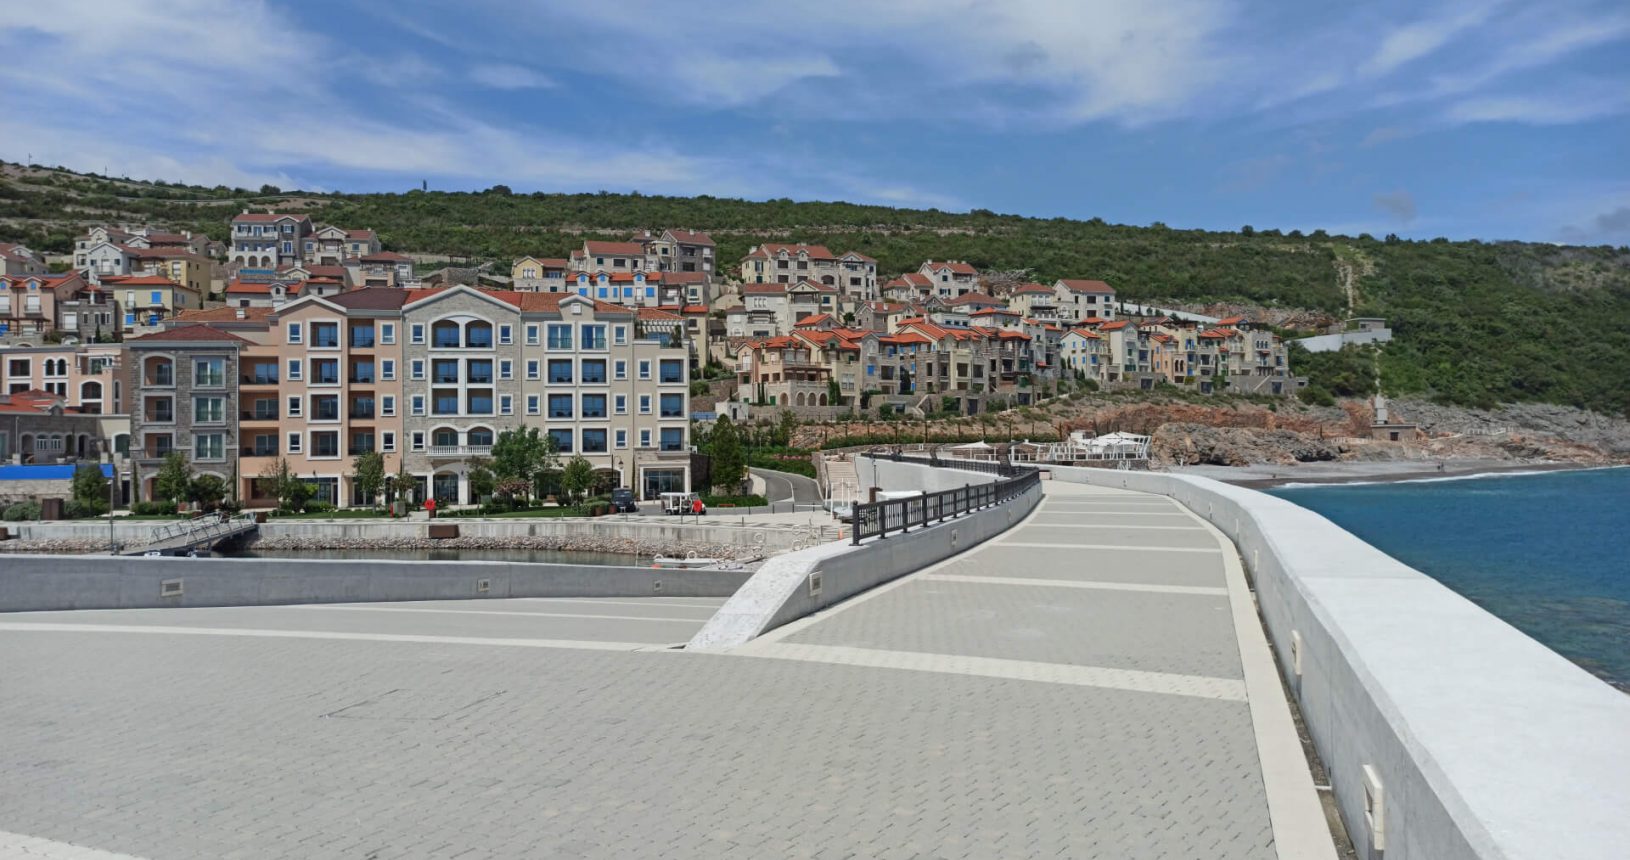 Lushtica Bay walking in the pier